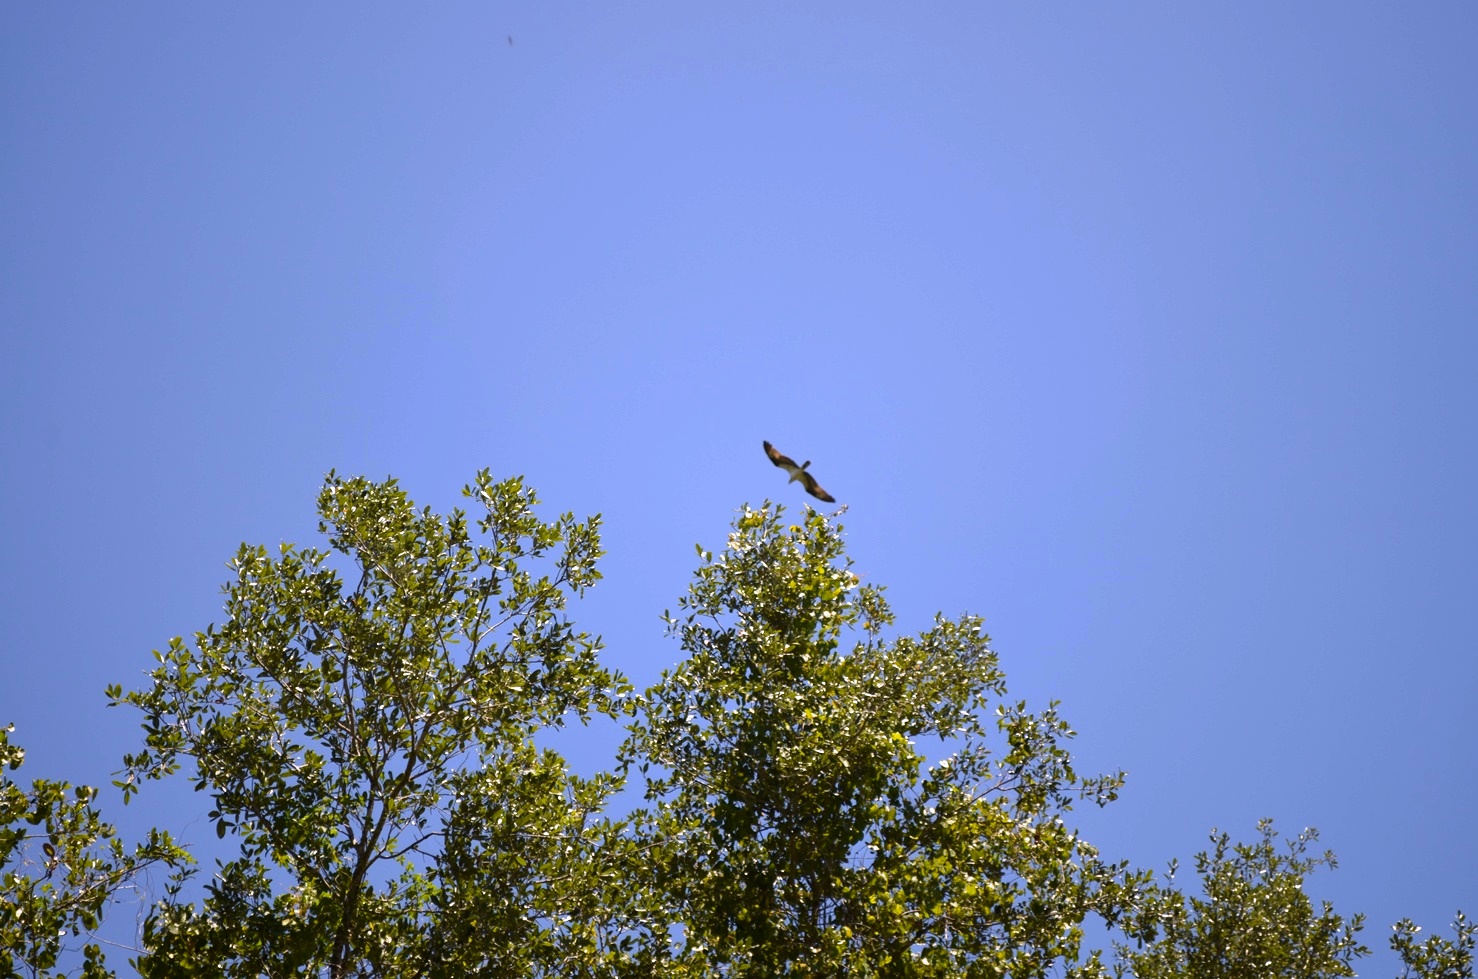 a bird flying through the air near some trees